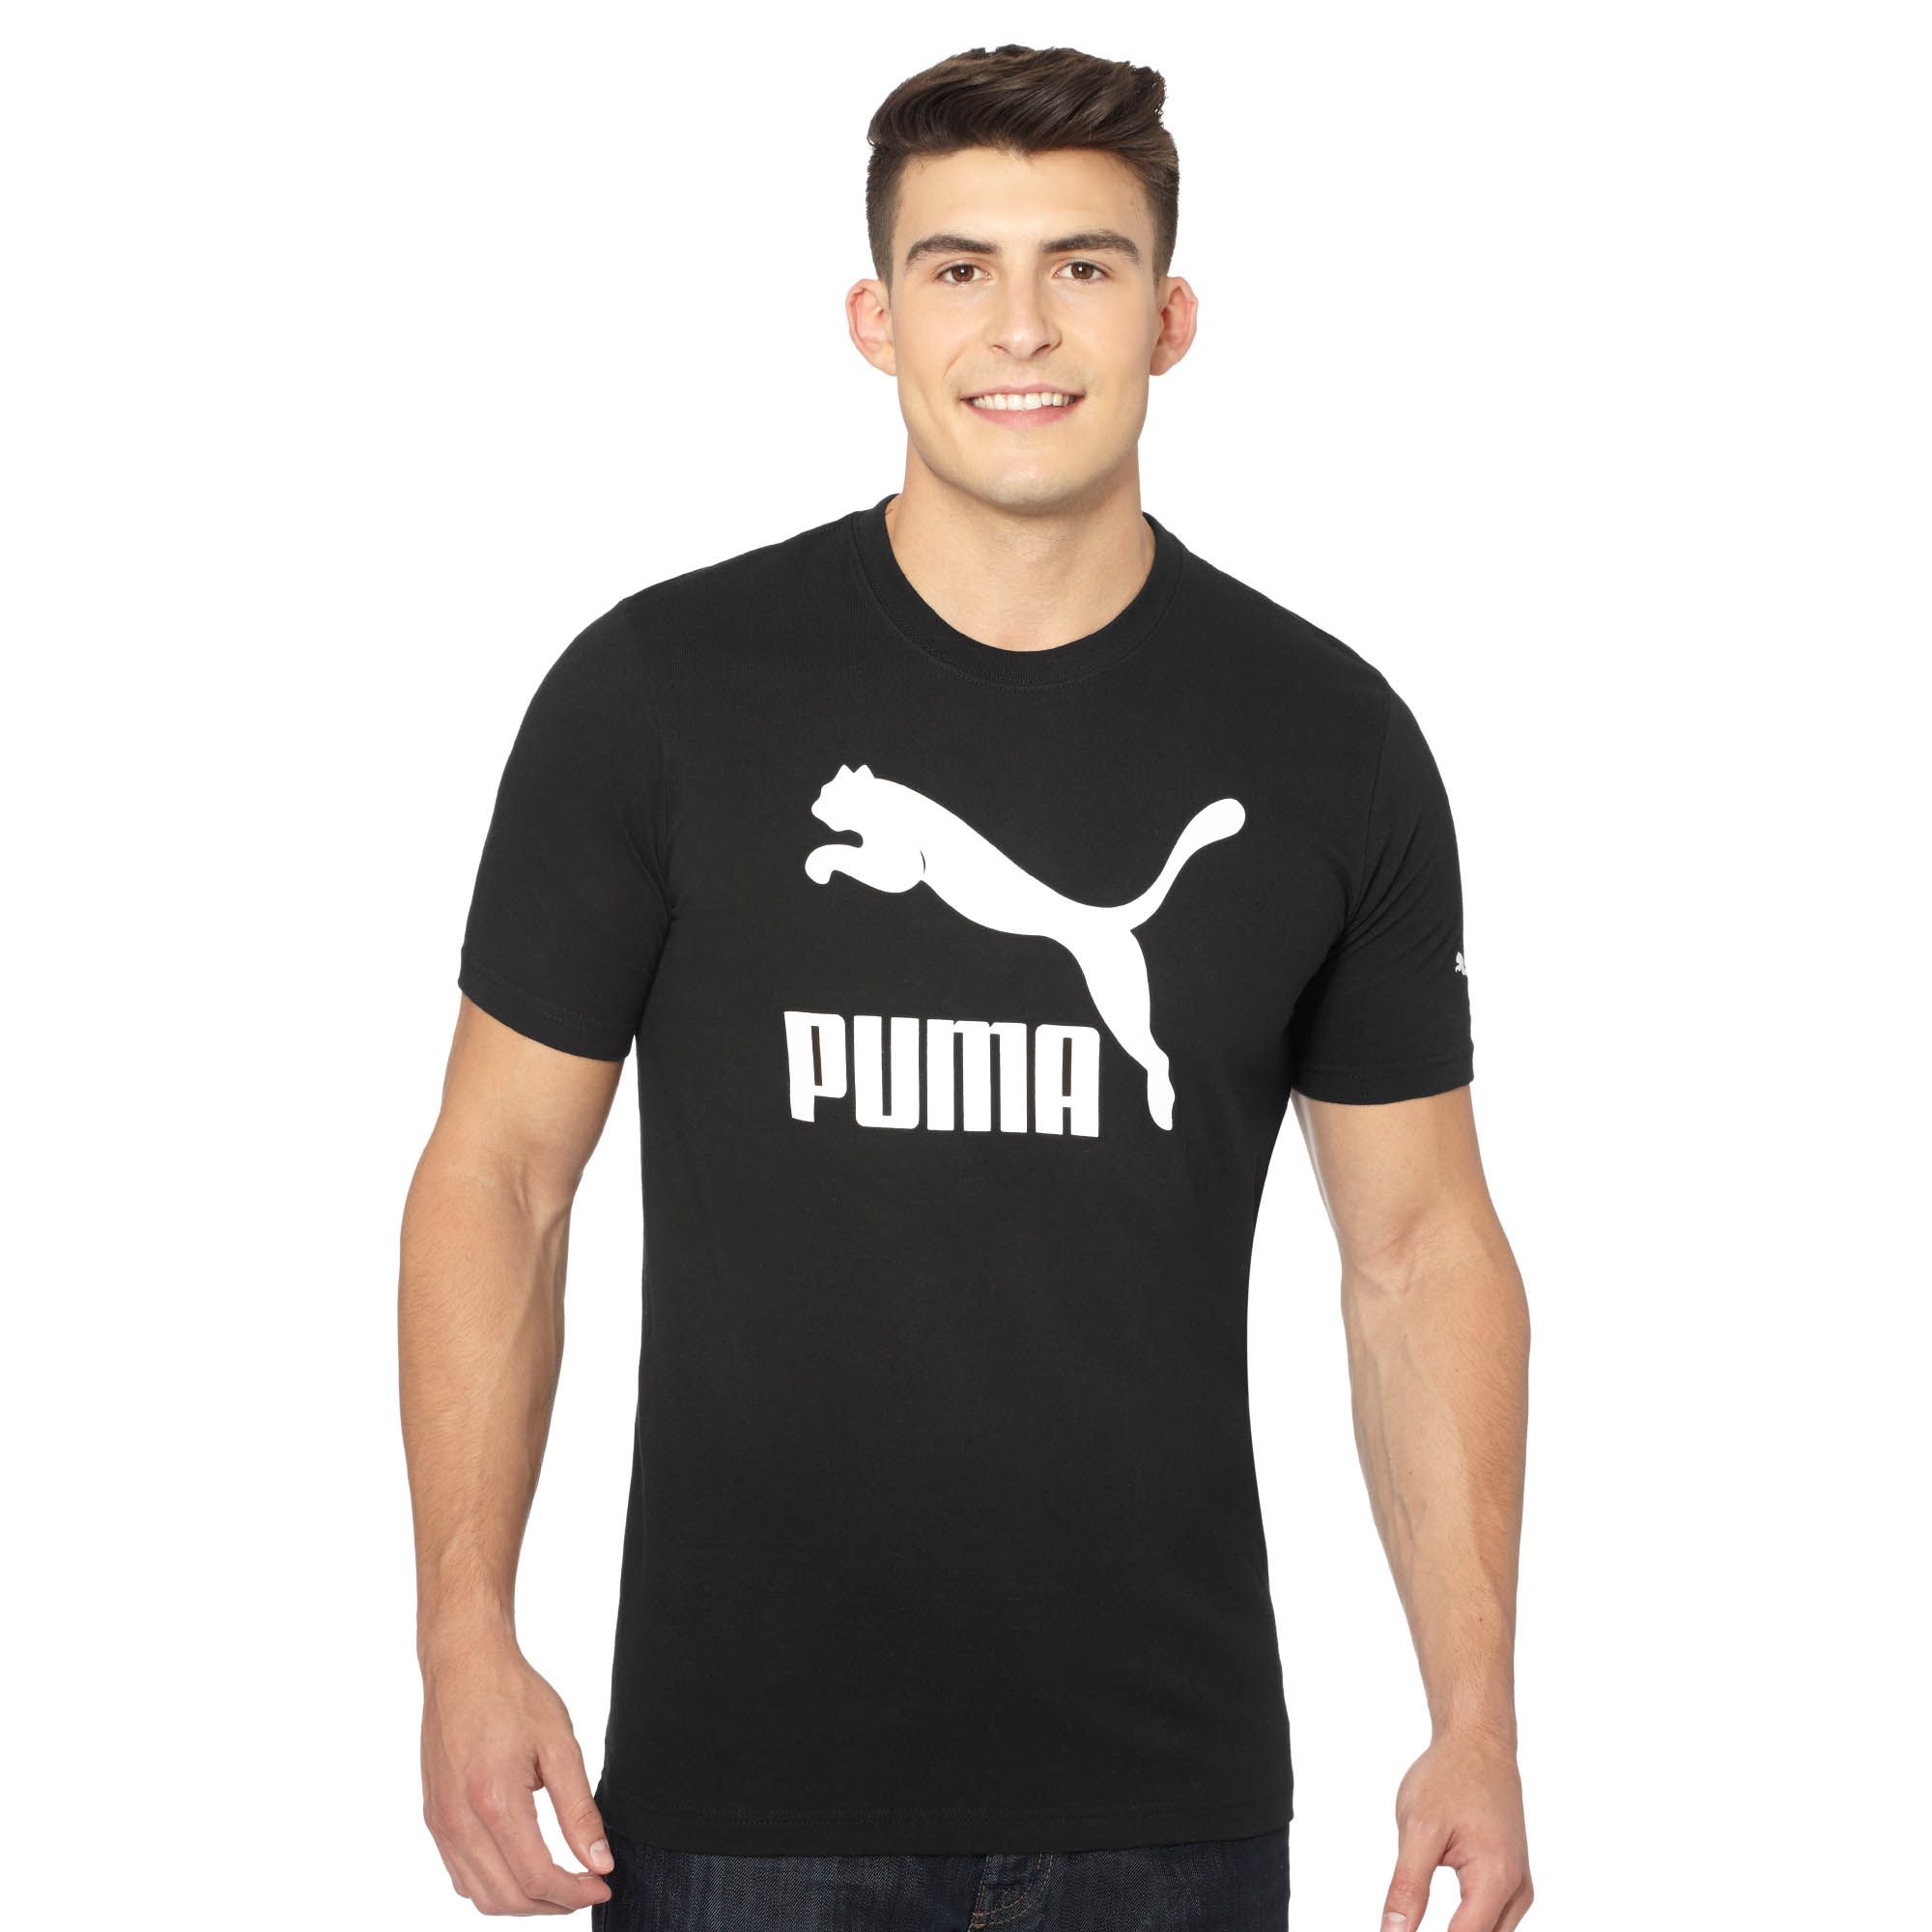 Men's Clothing | Shirts, Pants & Athletic Gear for Men | PUMA®